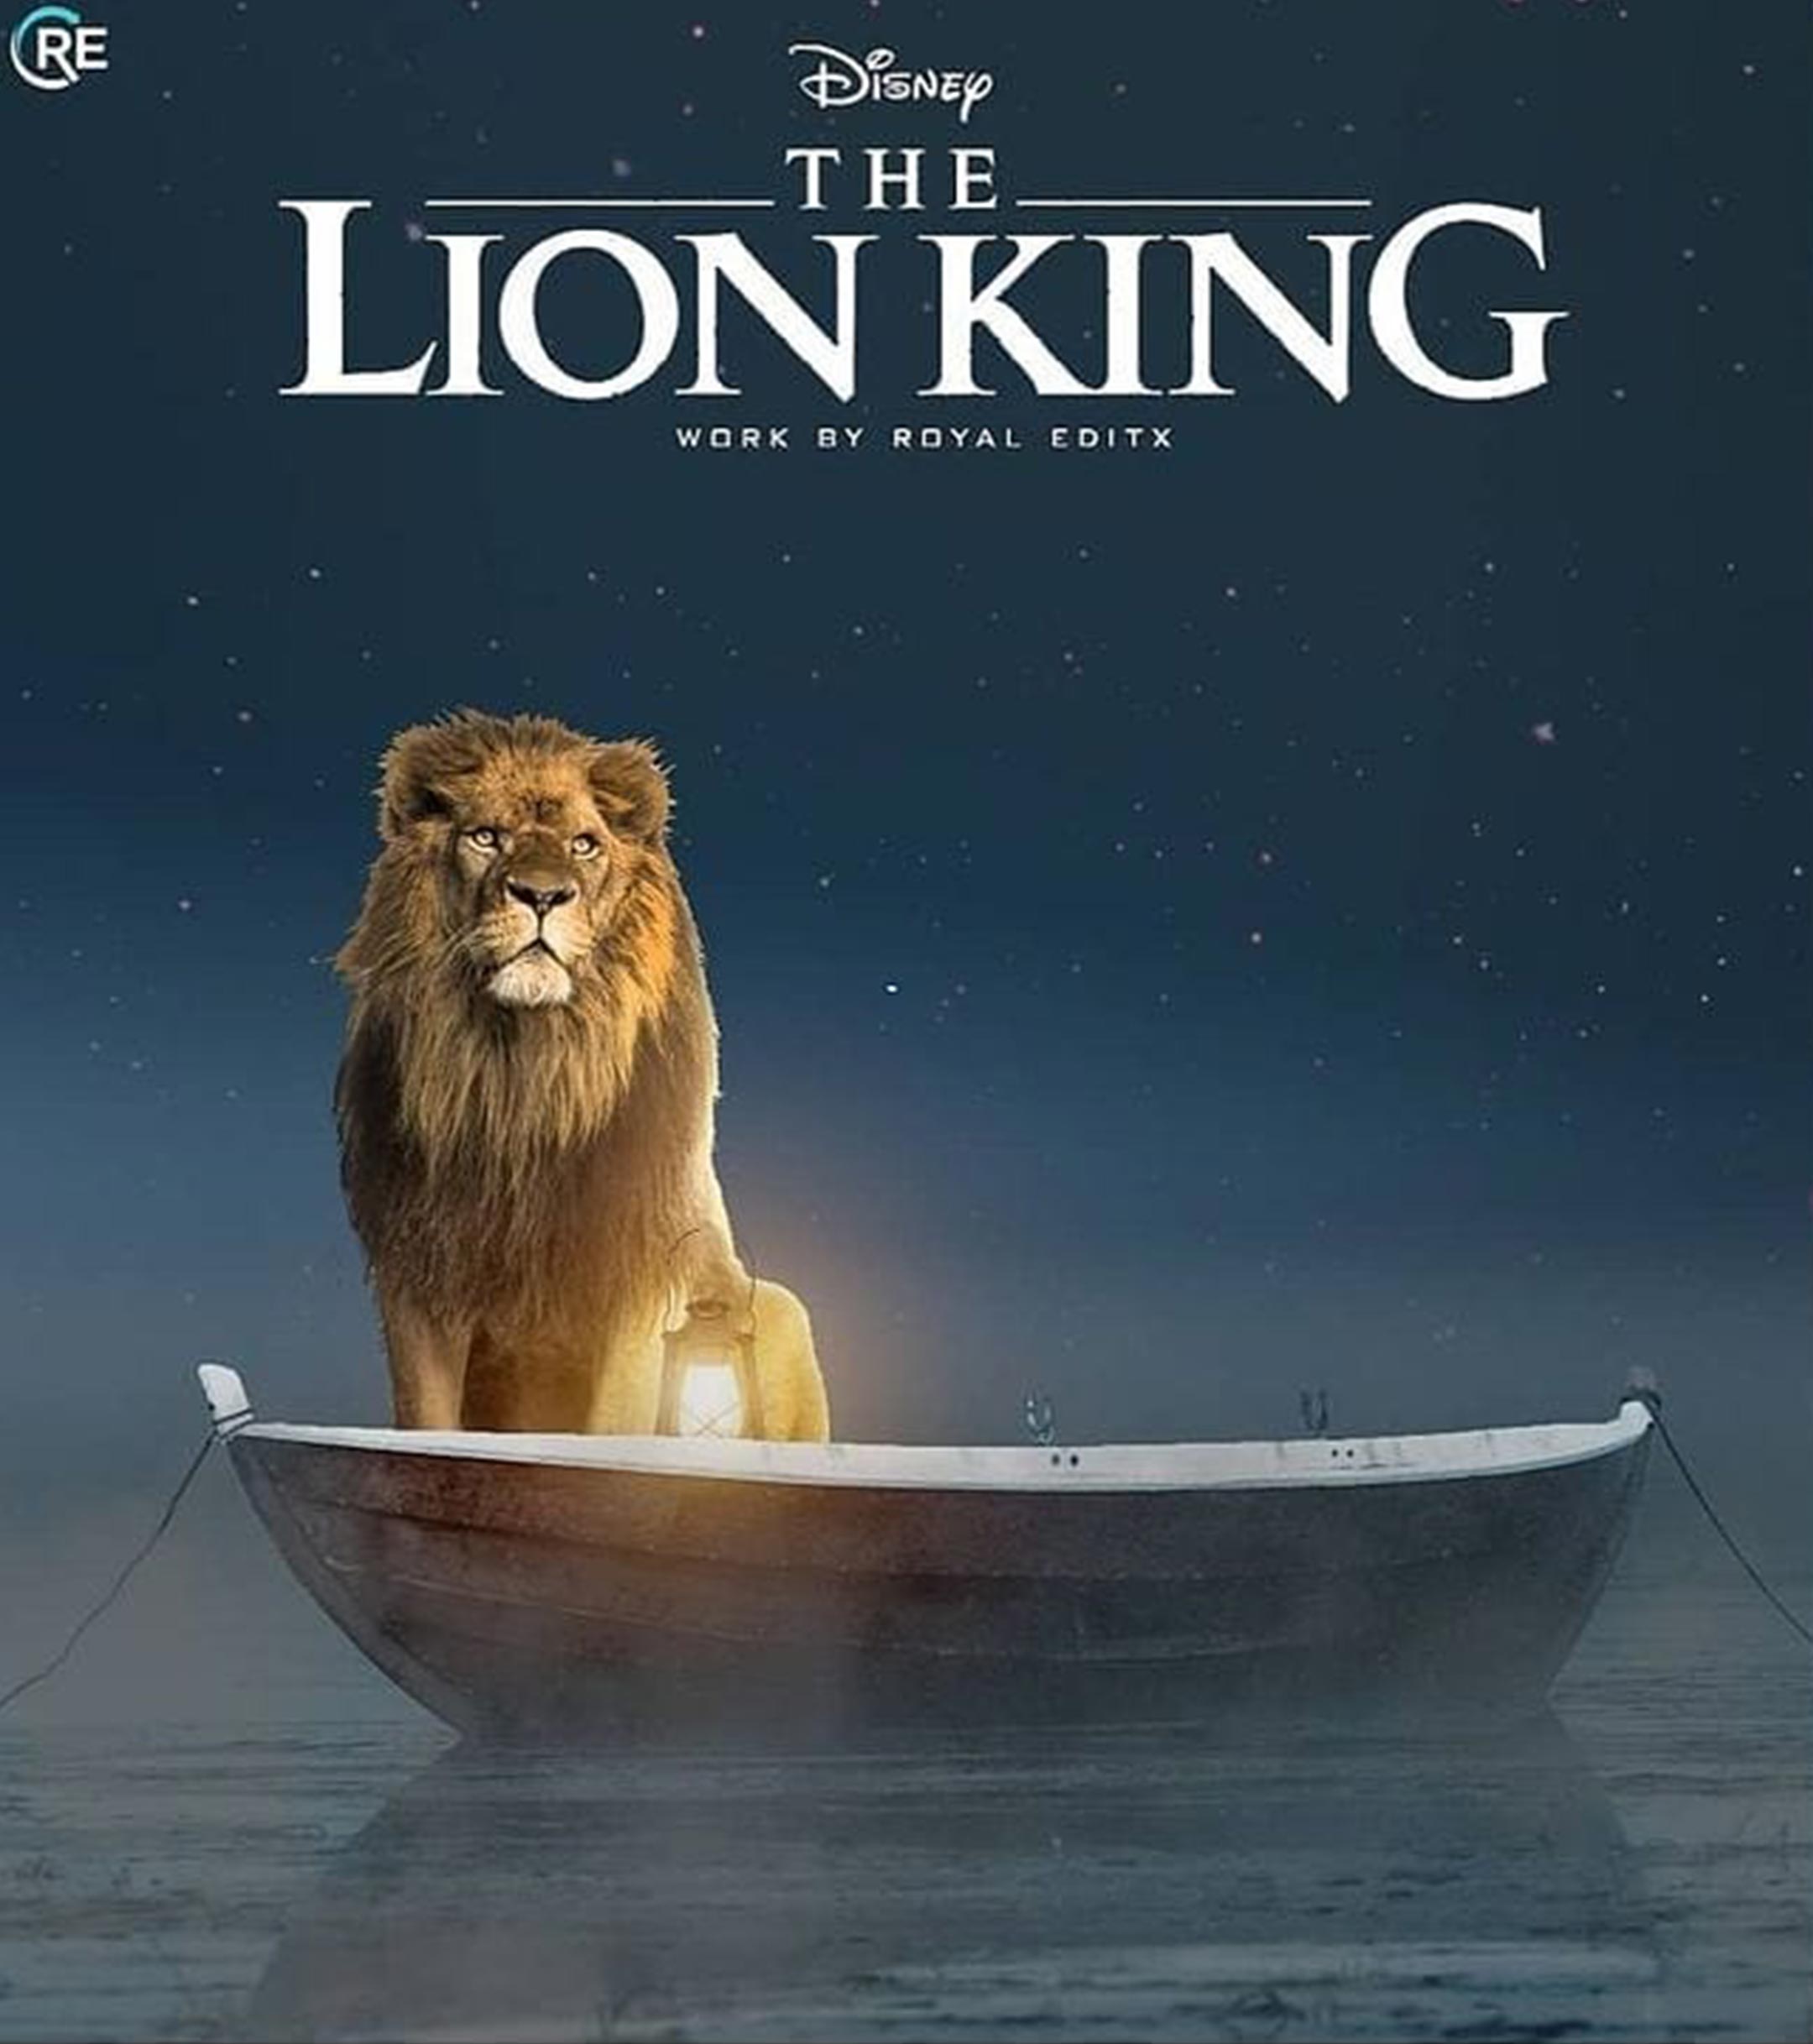 The Lionking Movie PicsArt Background Free Stock Image